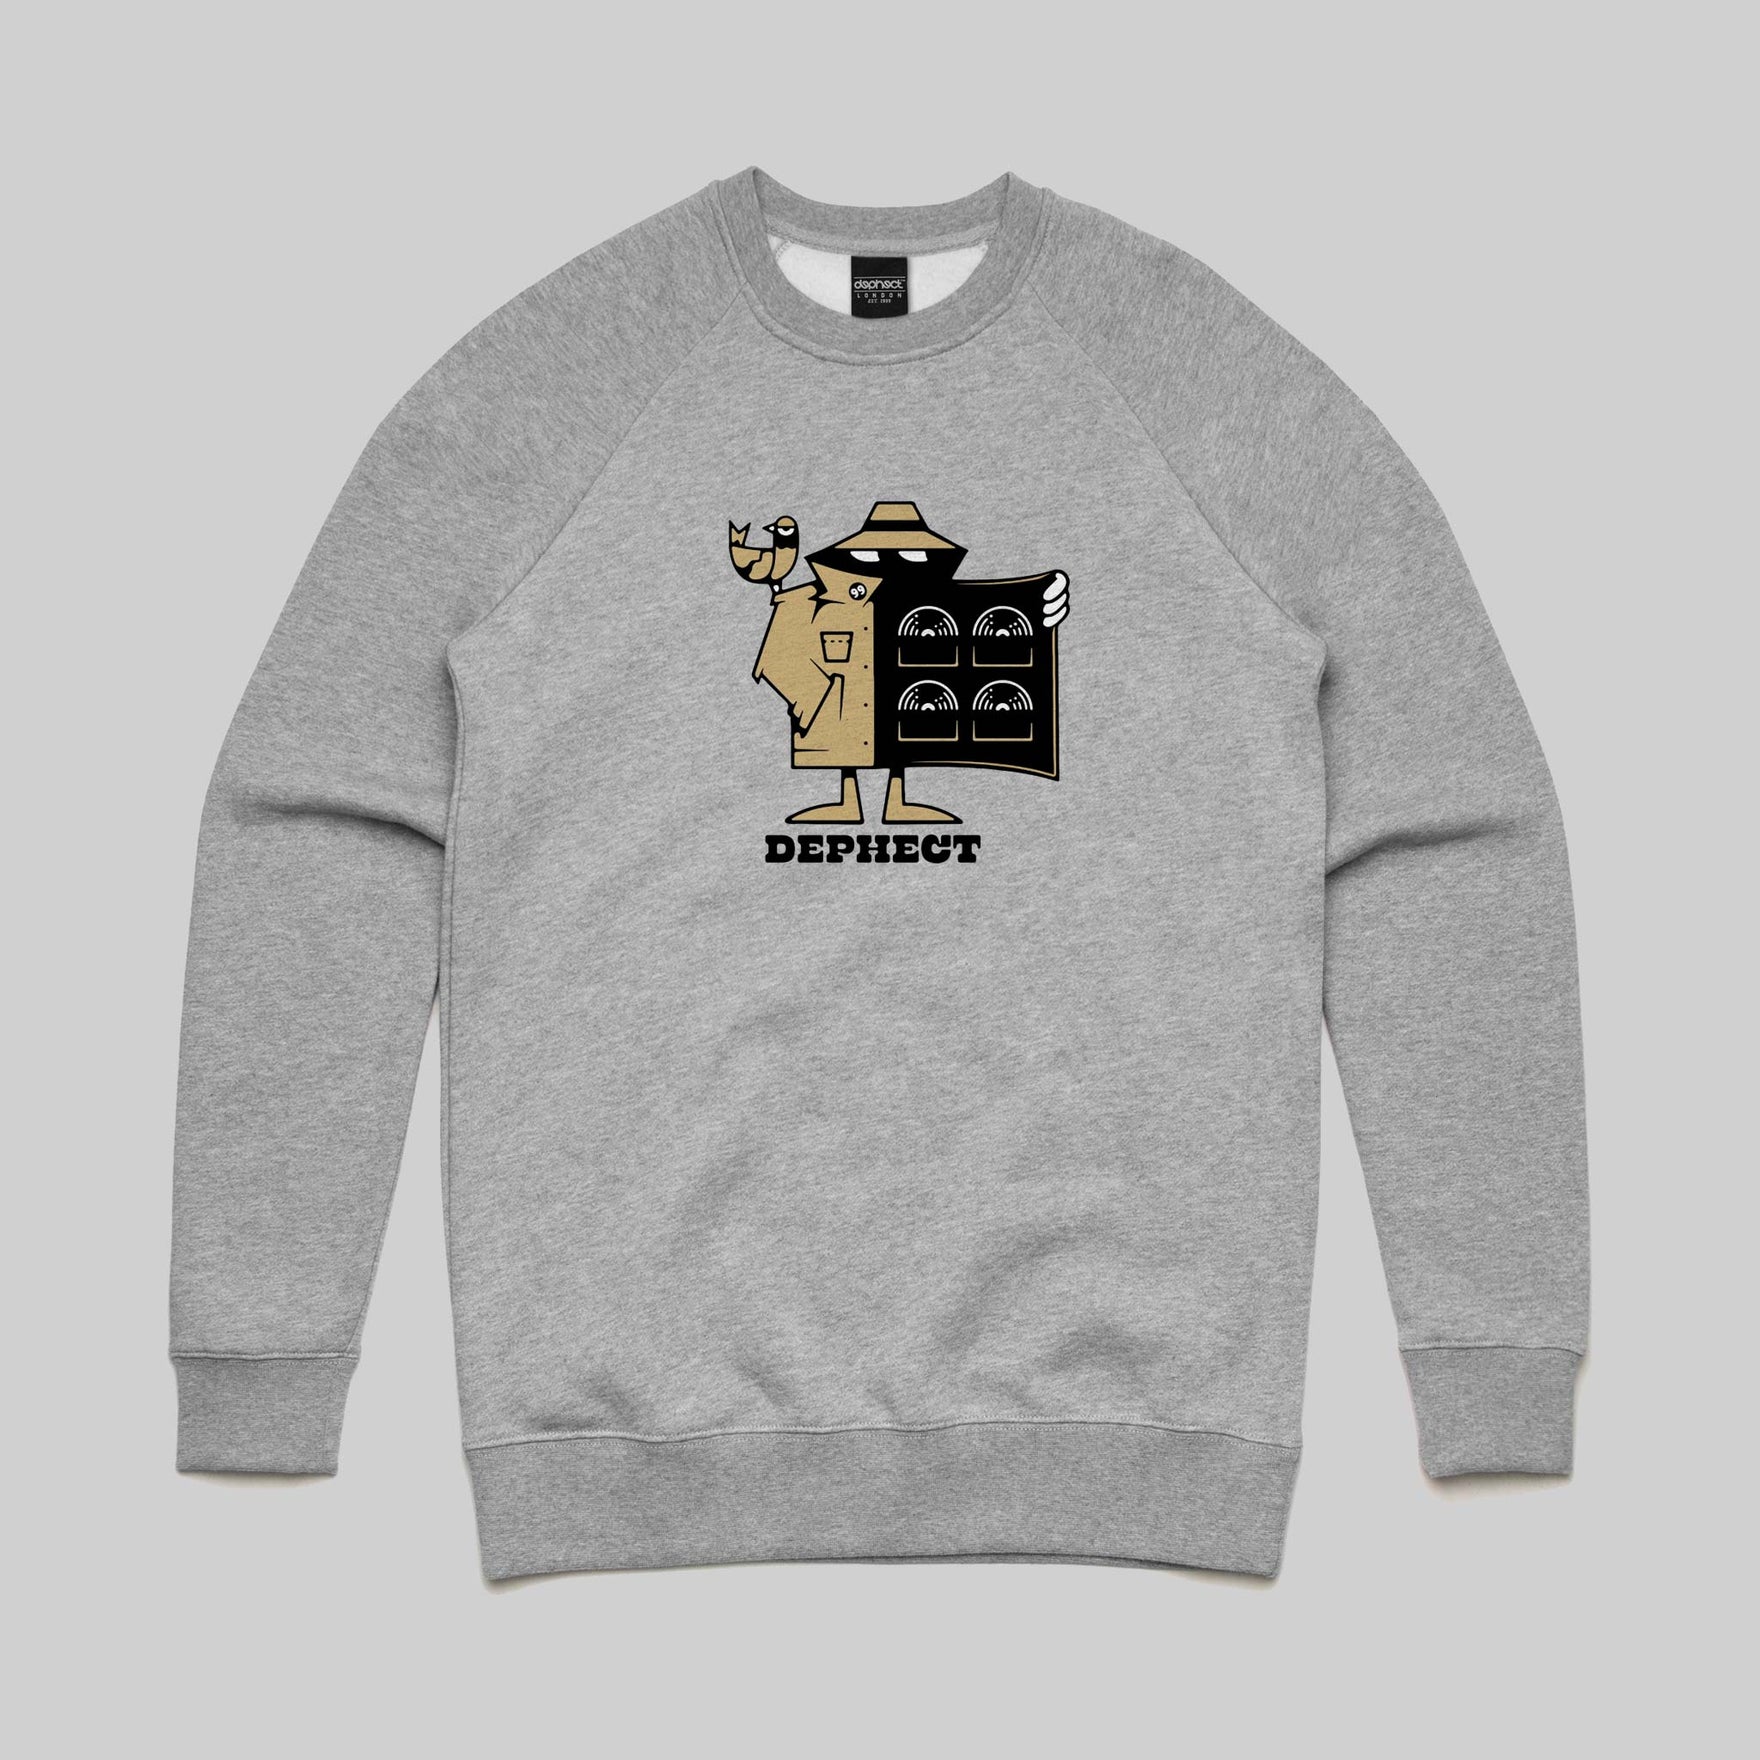 Contraband Sweatshirt / Grey / by Fried Cactus Studio